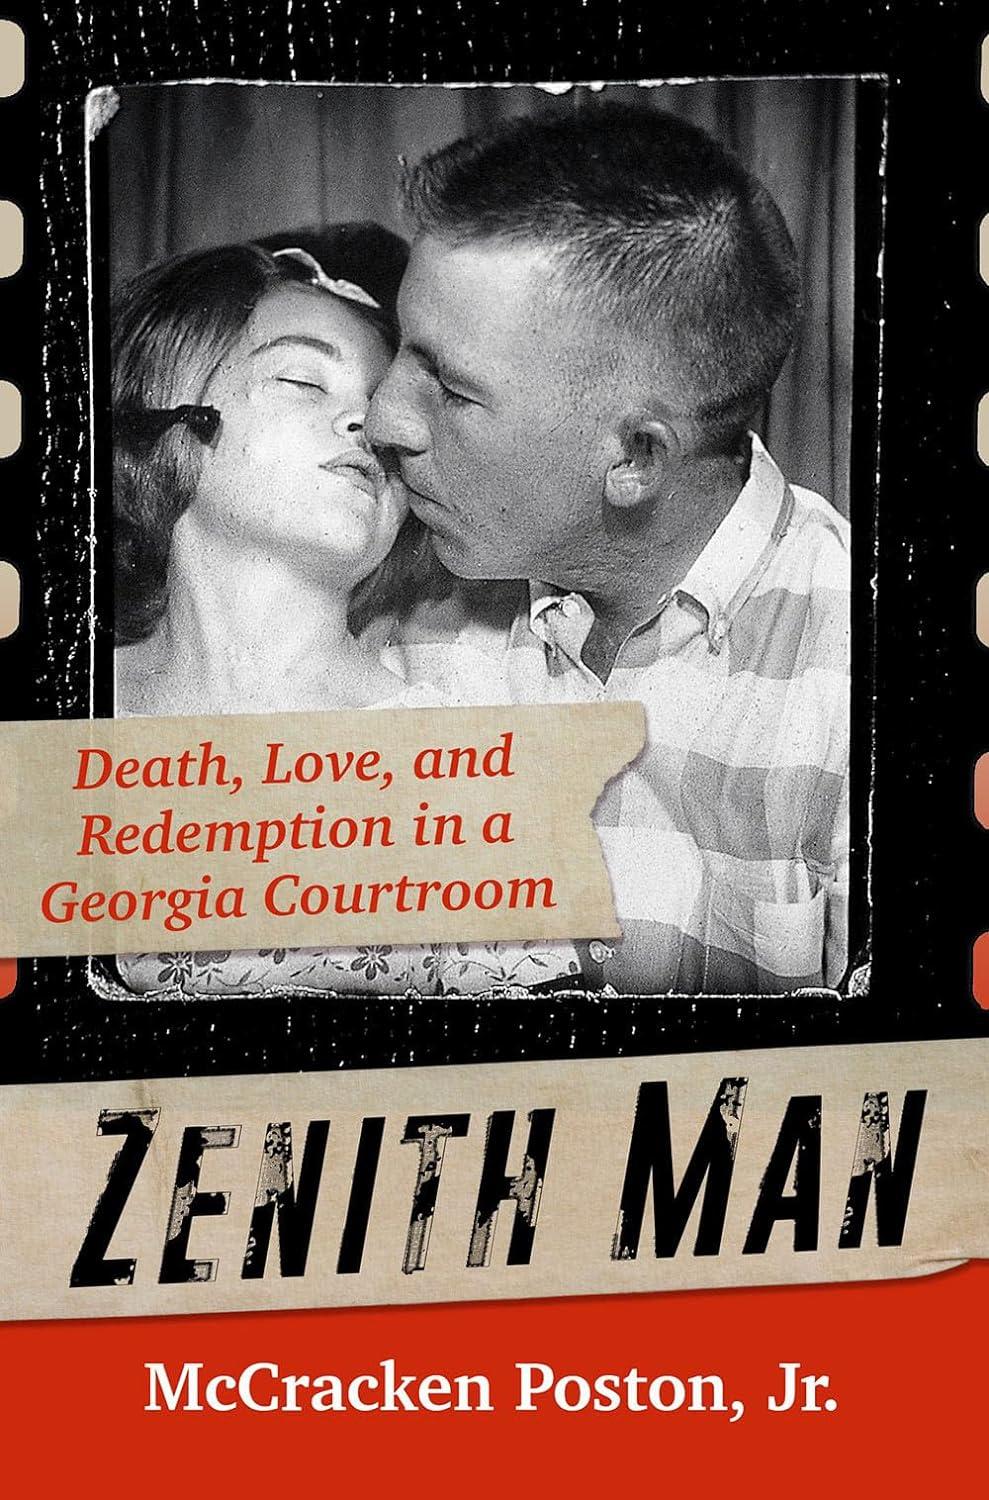 Zenith Man: Death, Love, and Redemption in a Georgia Courtroom by McCracken Poston Jr.